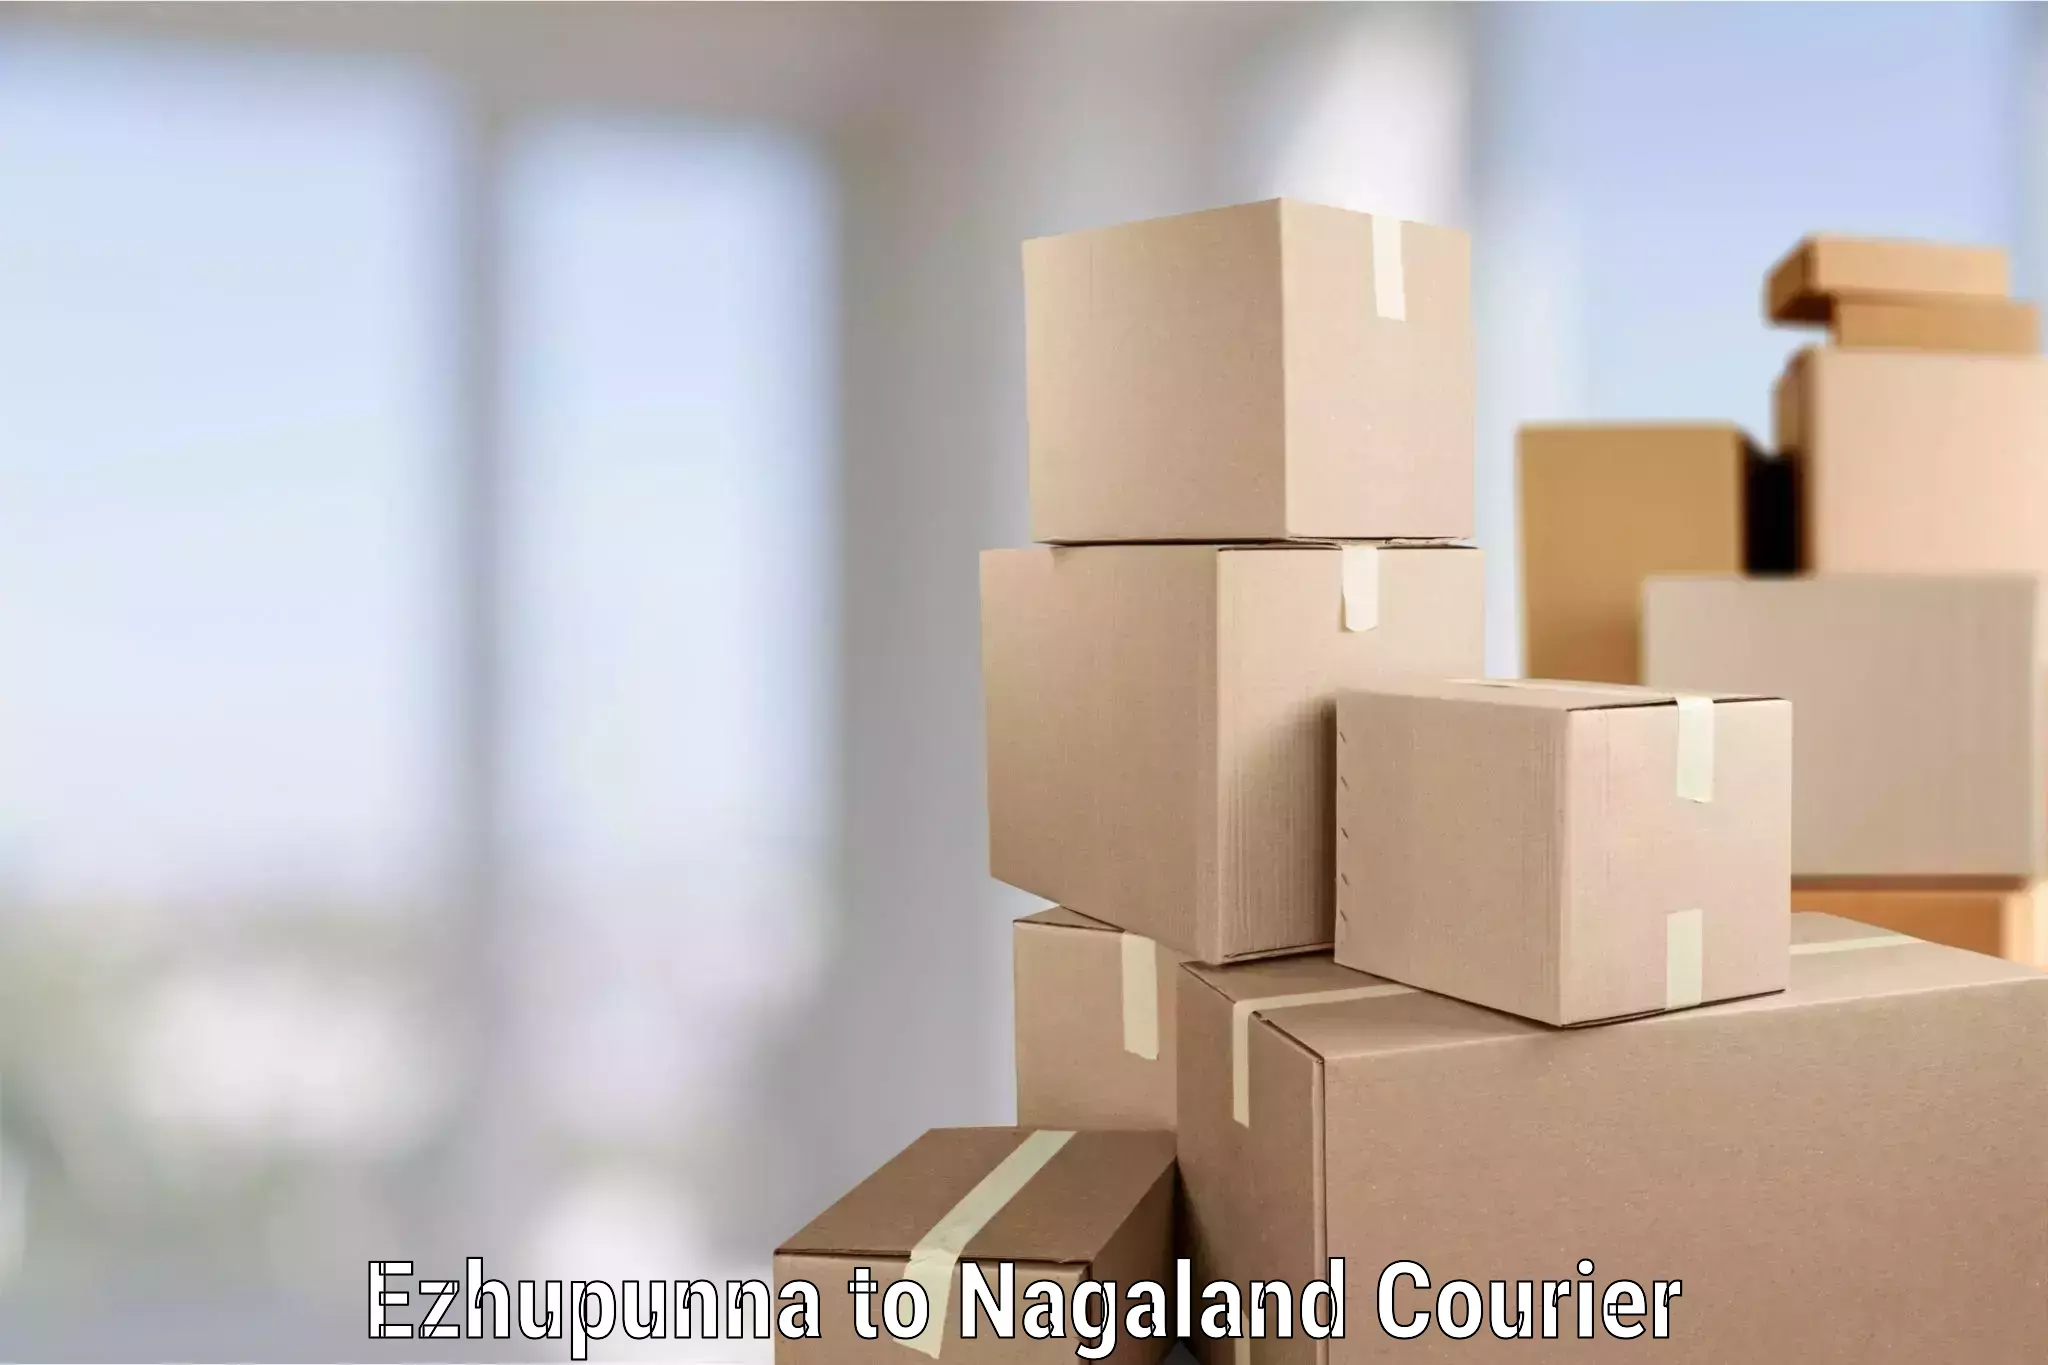 Specialized moving company Ezhupunna to Nagaland